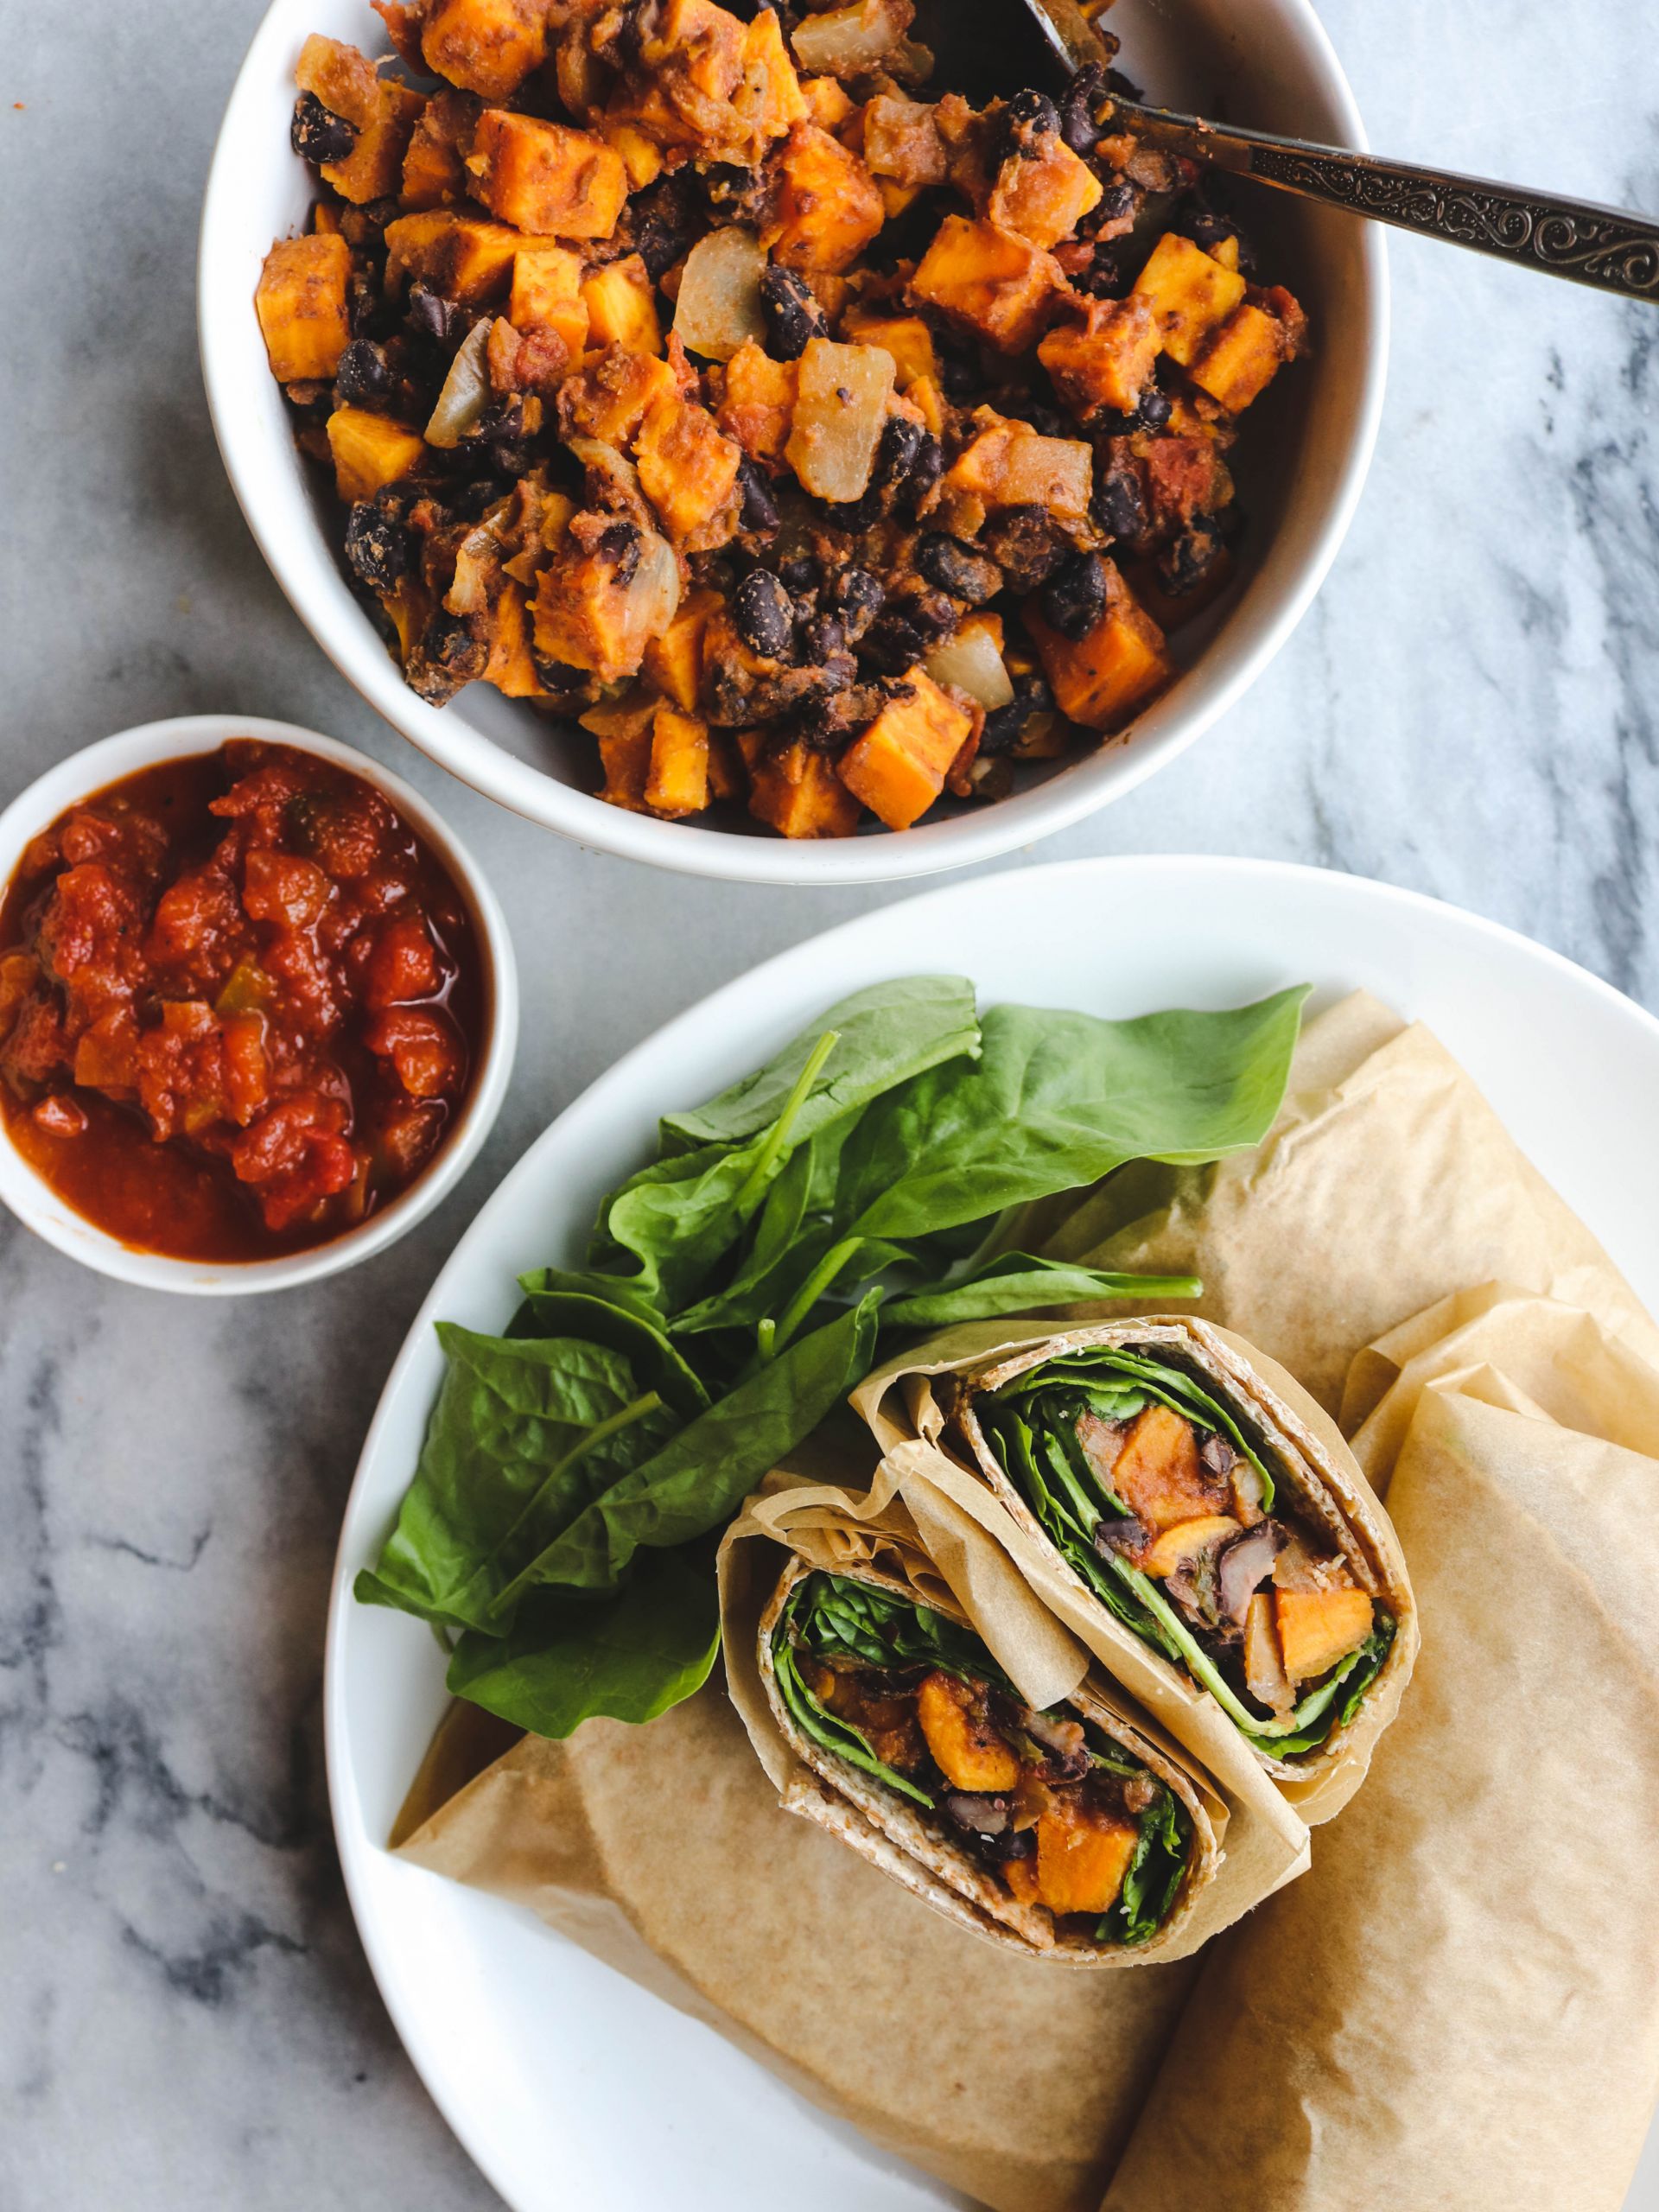 15 Most Inspired Vegan Breakfast Burrito Freezer - Best Product Reviews